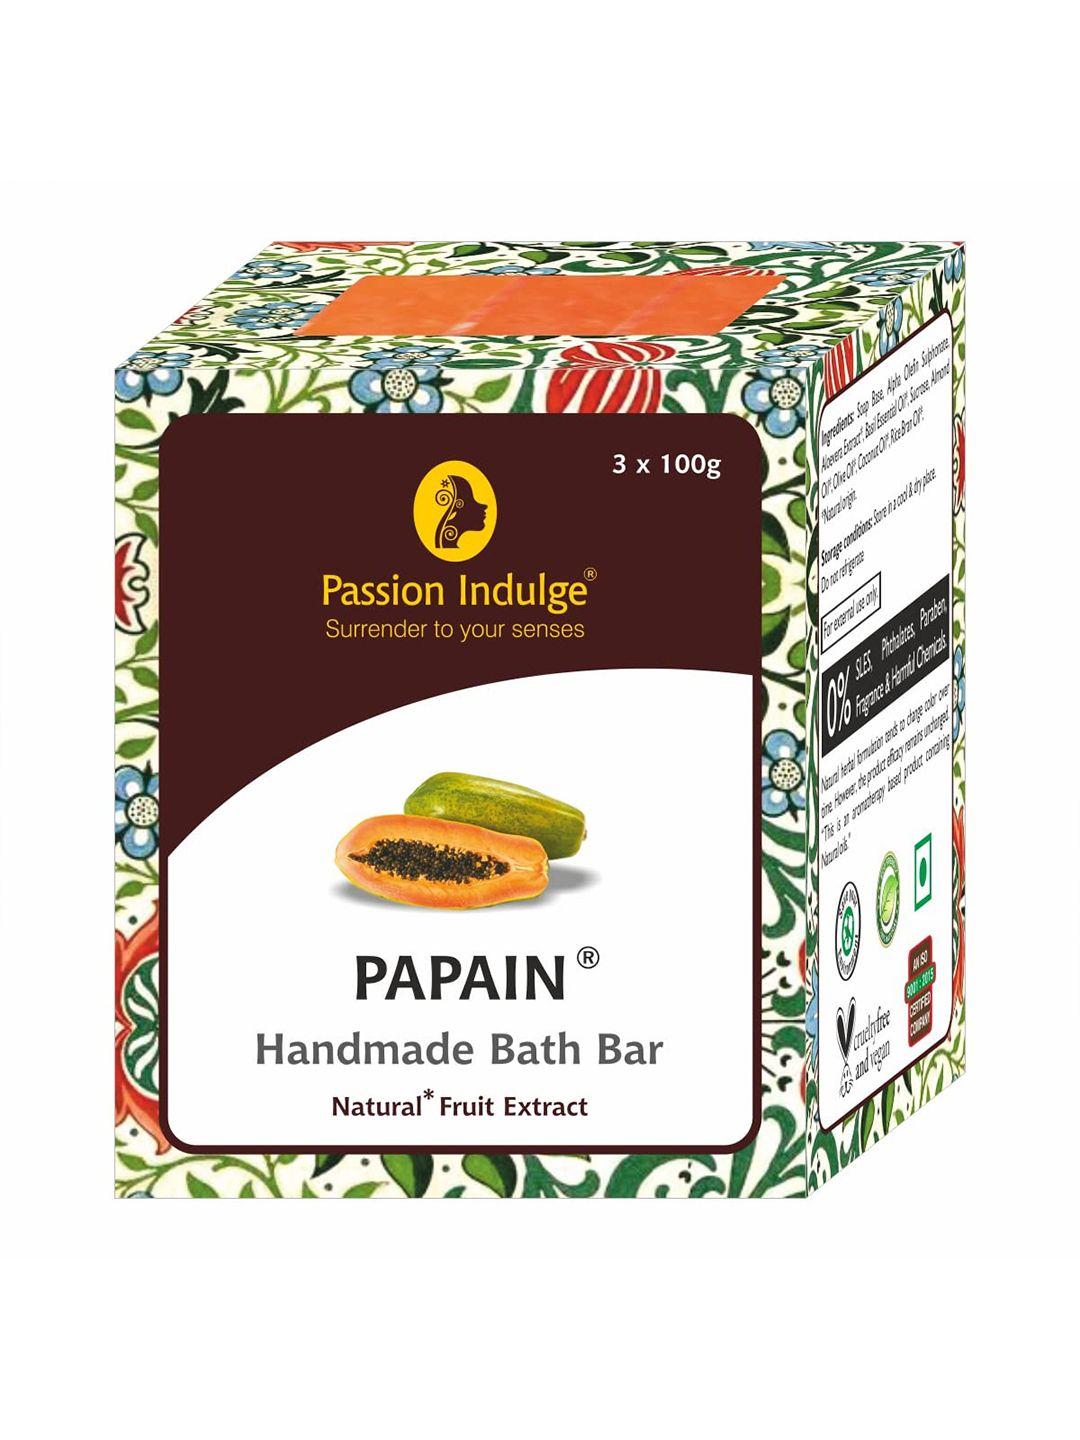 passion indulge pack of 3 natural handmade papain bath bar soaps